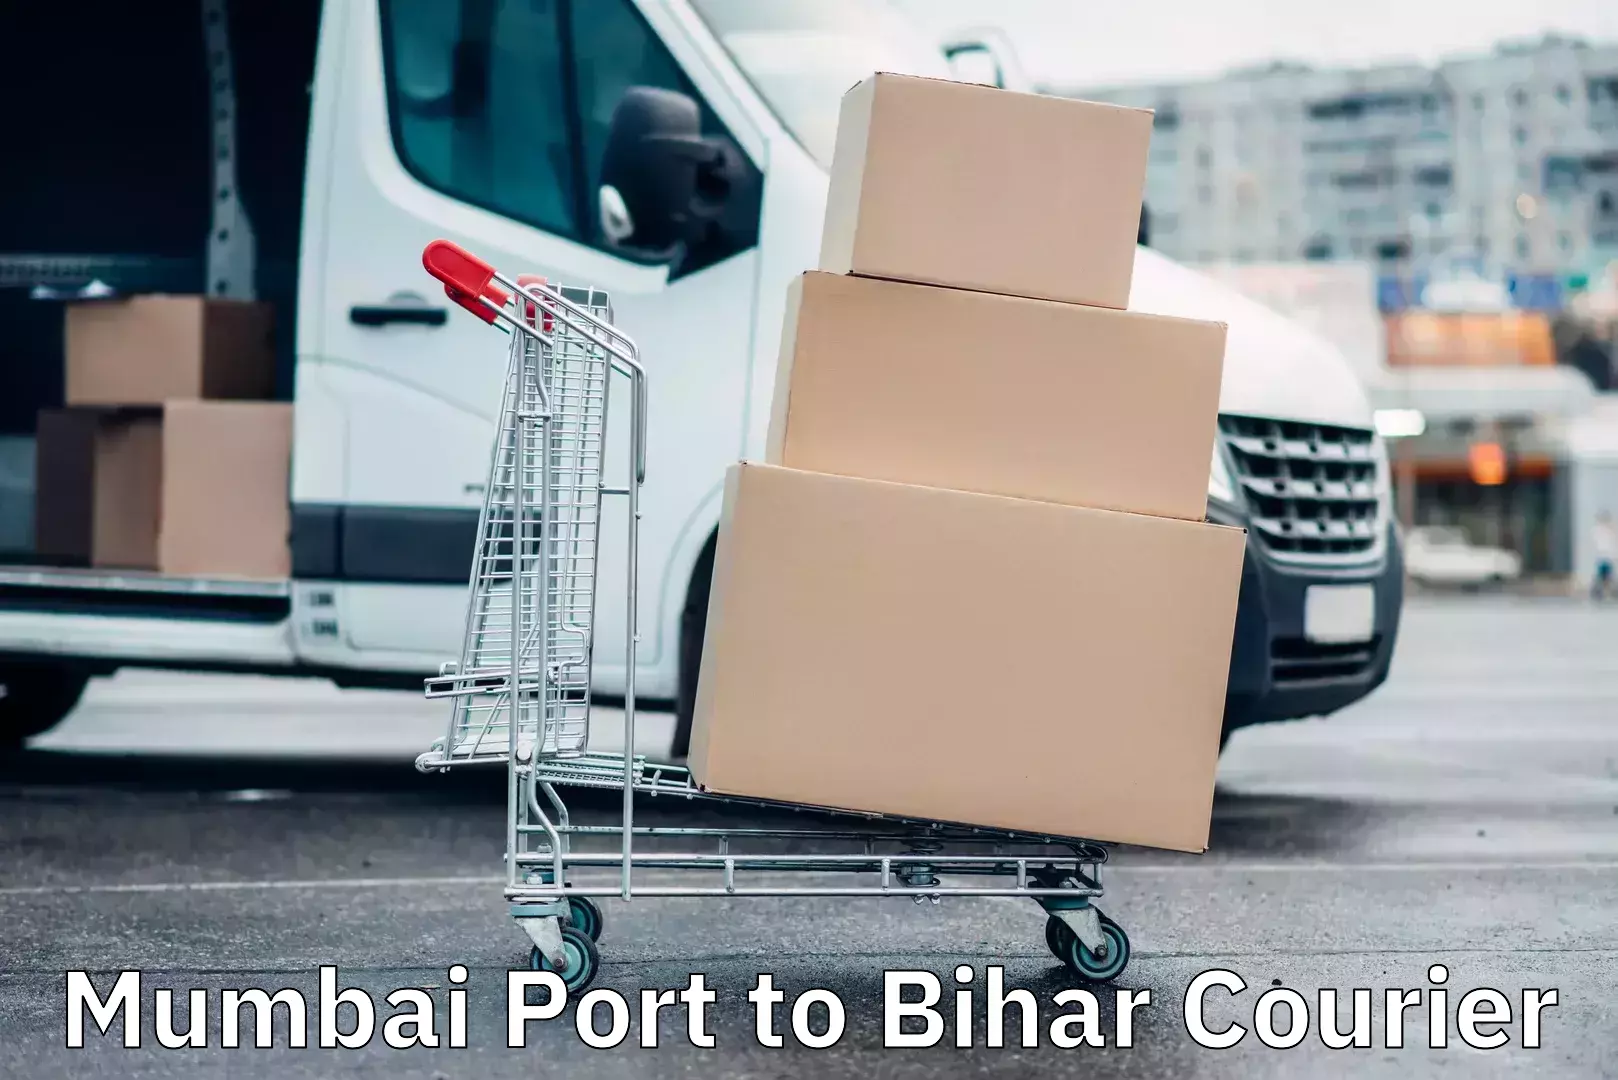 Quality courier services Mumbai Port to Bihar